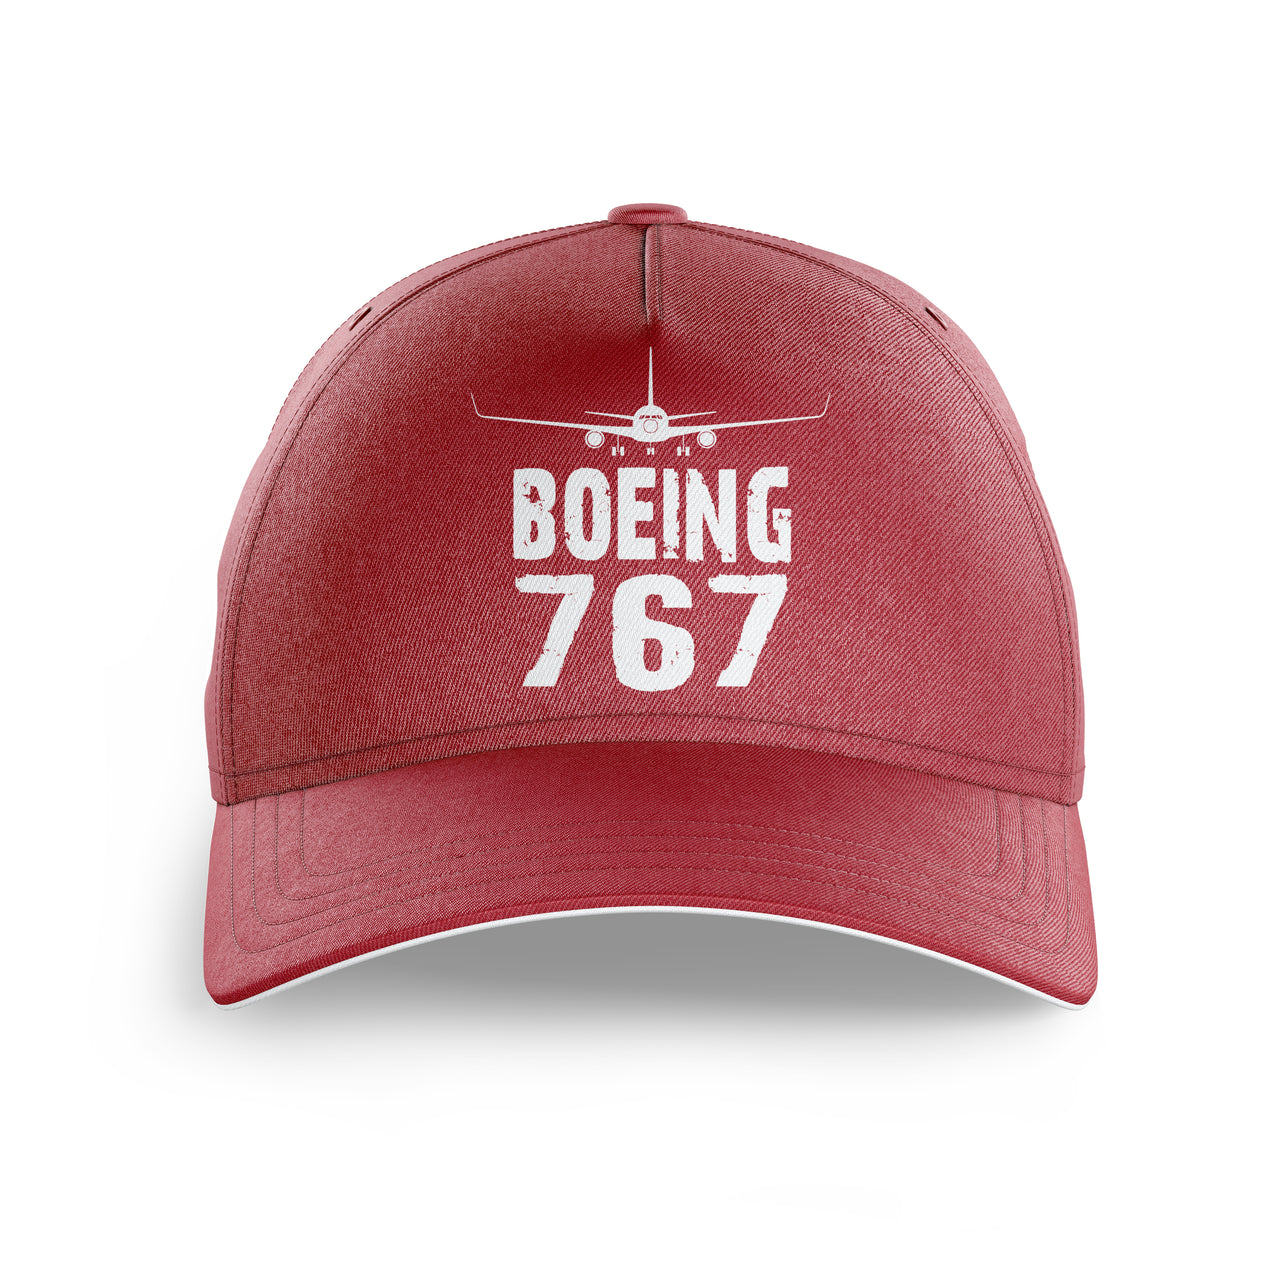 Boeing 767 & Plane Printed Hats